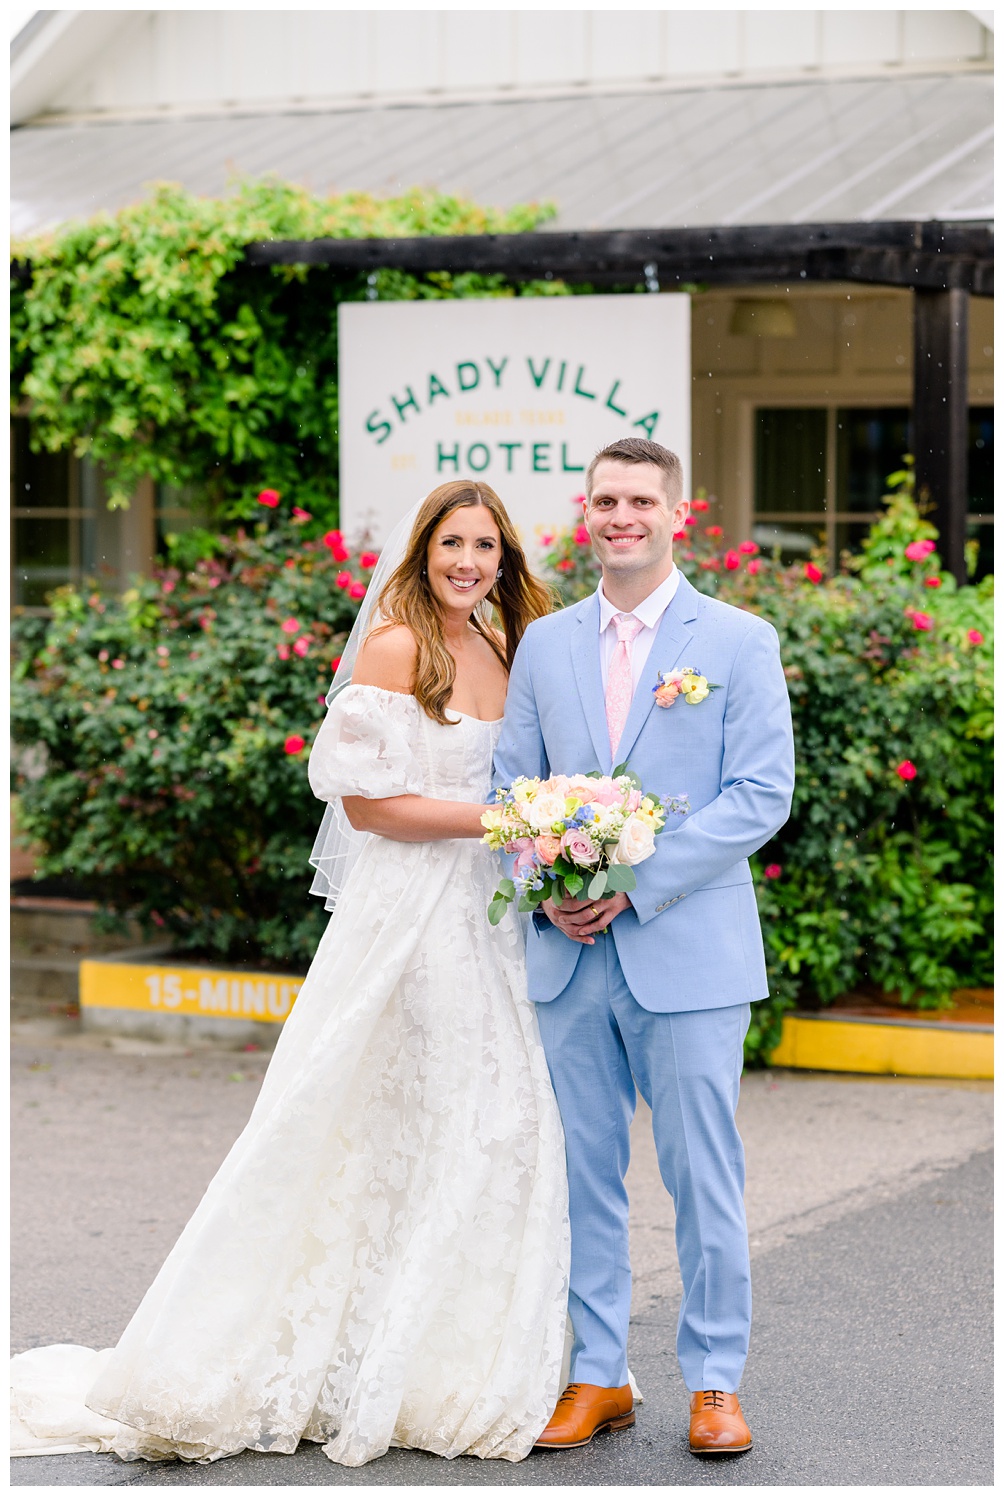 Shady Villa Hotel Wedding Photographer